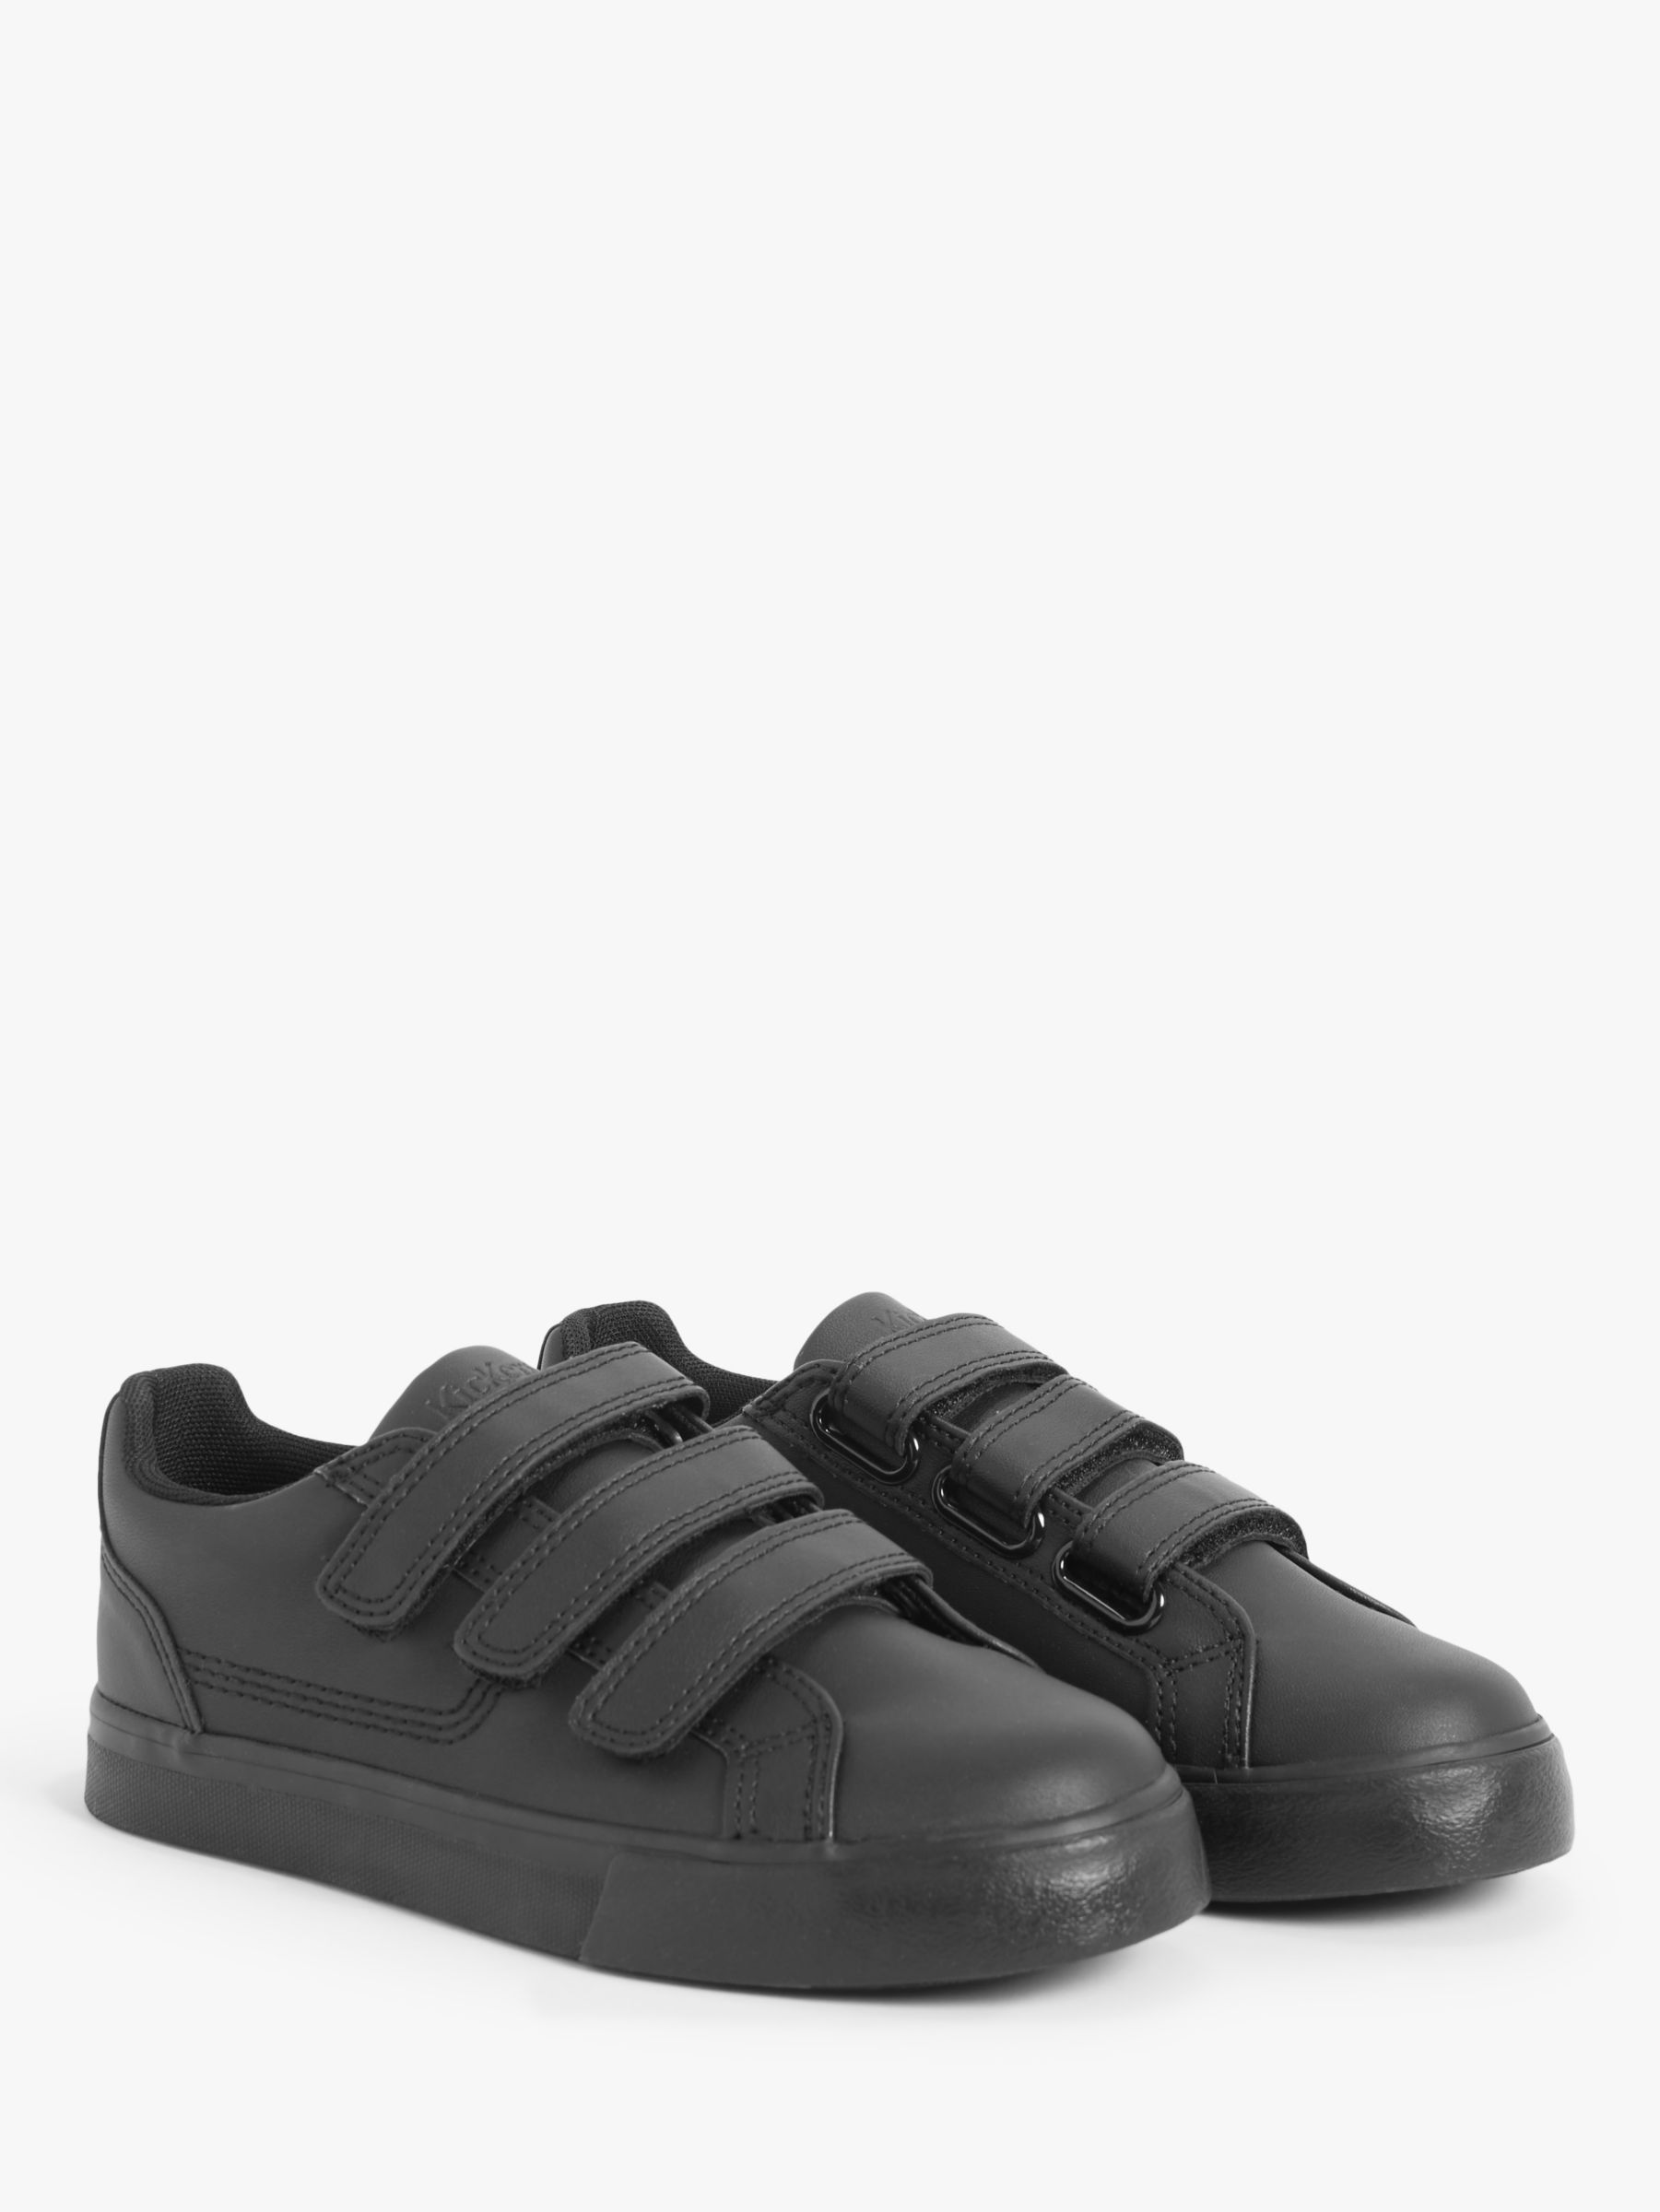 Kickers Kids' Tovni Trip School Shoes, Black Leather, 28